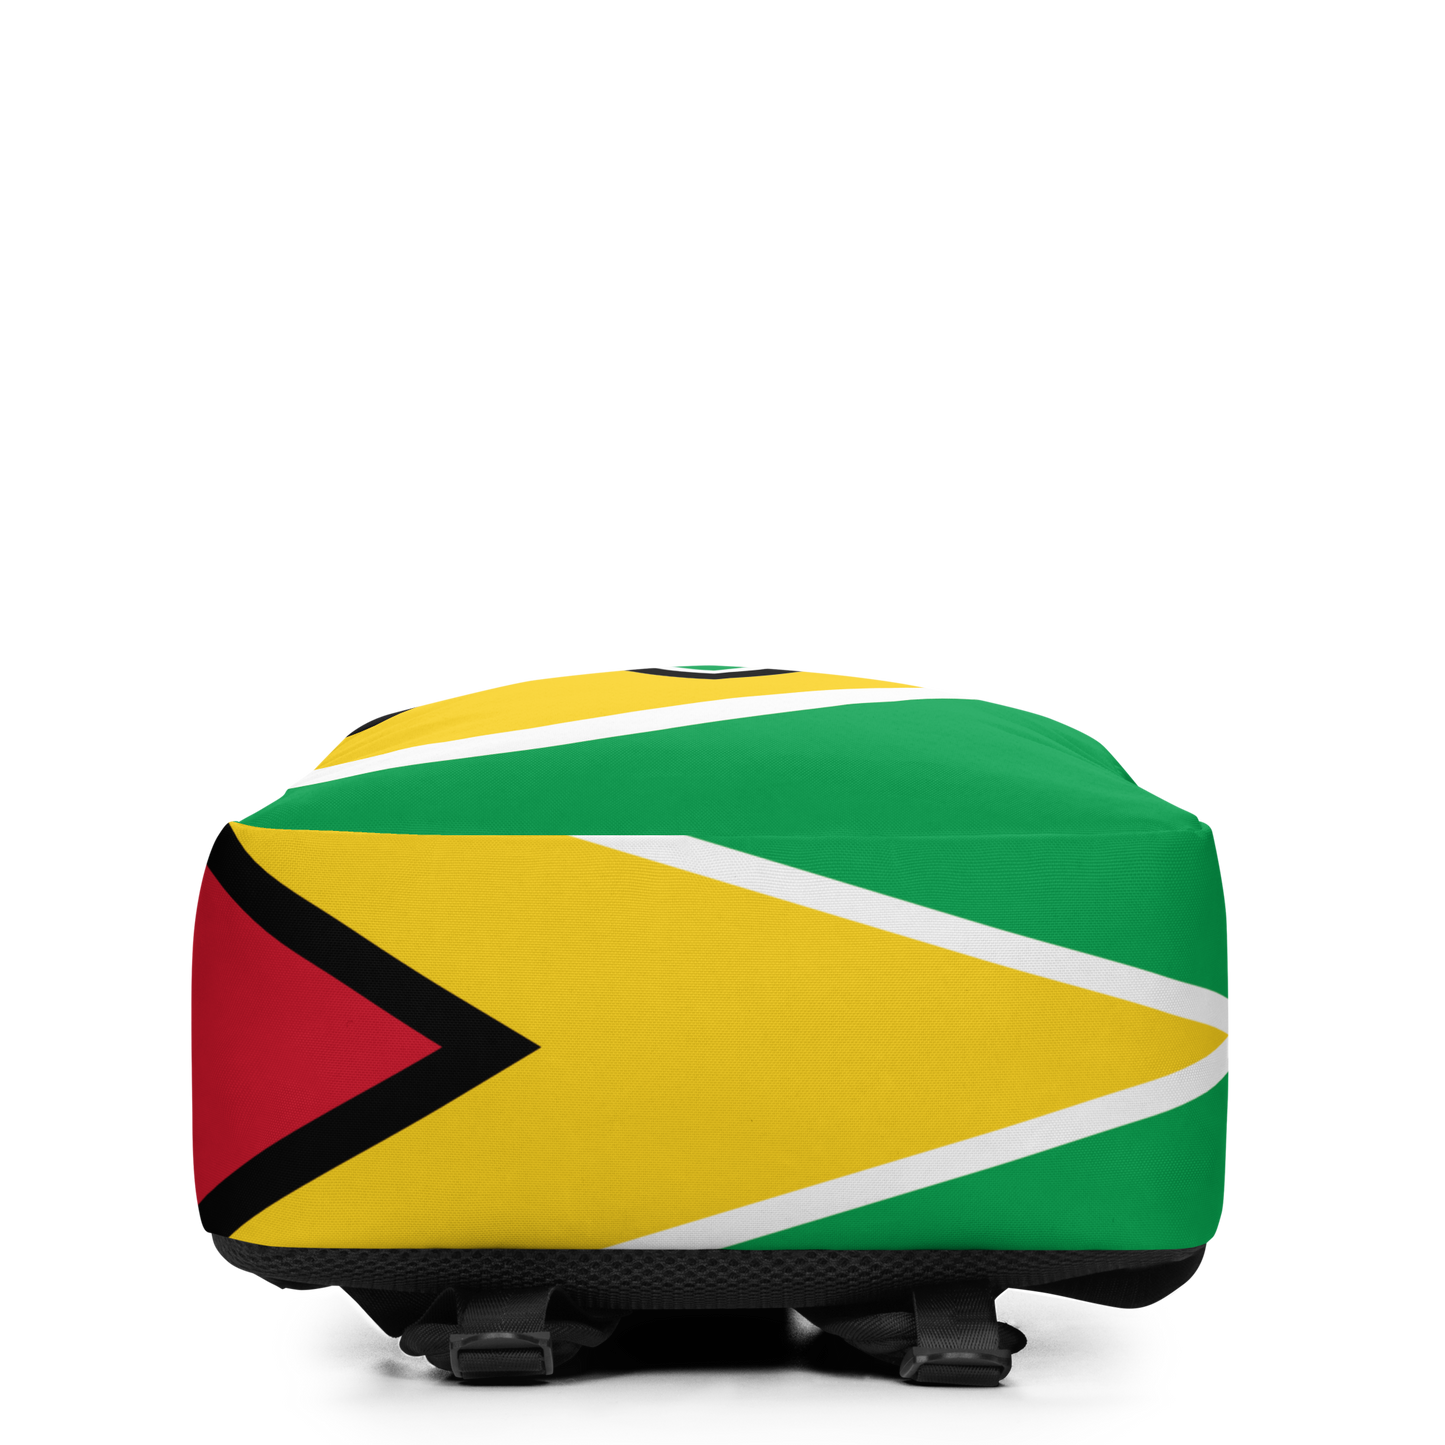 Guyana Minimalist Backpack